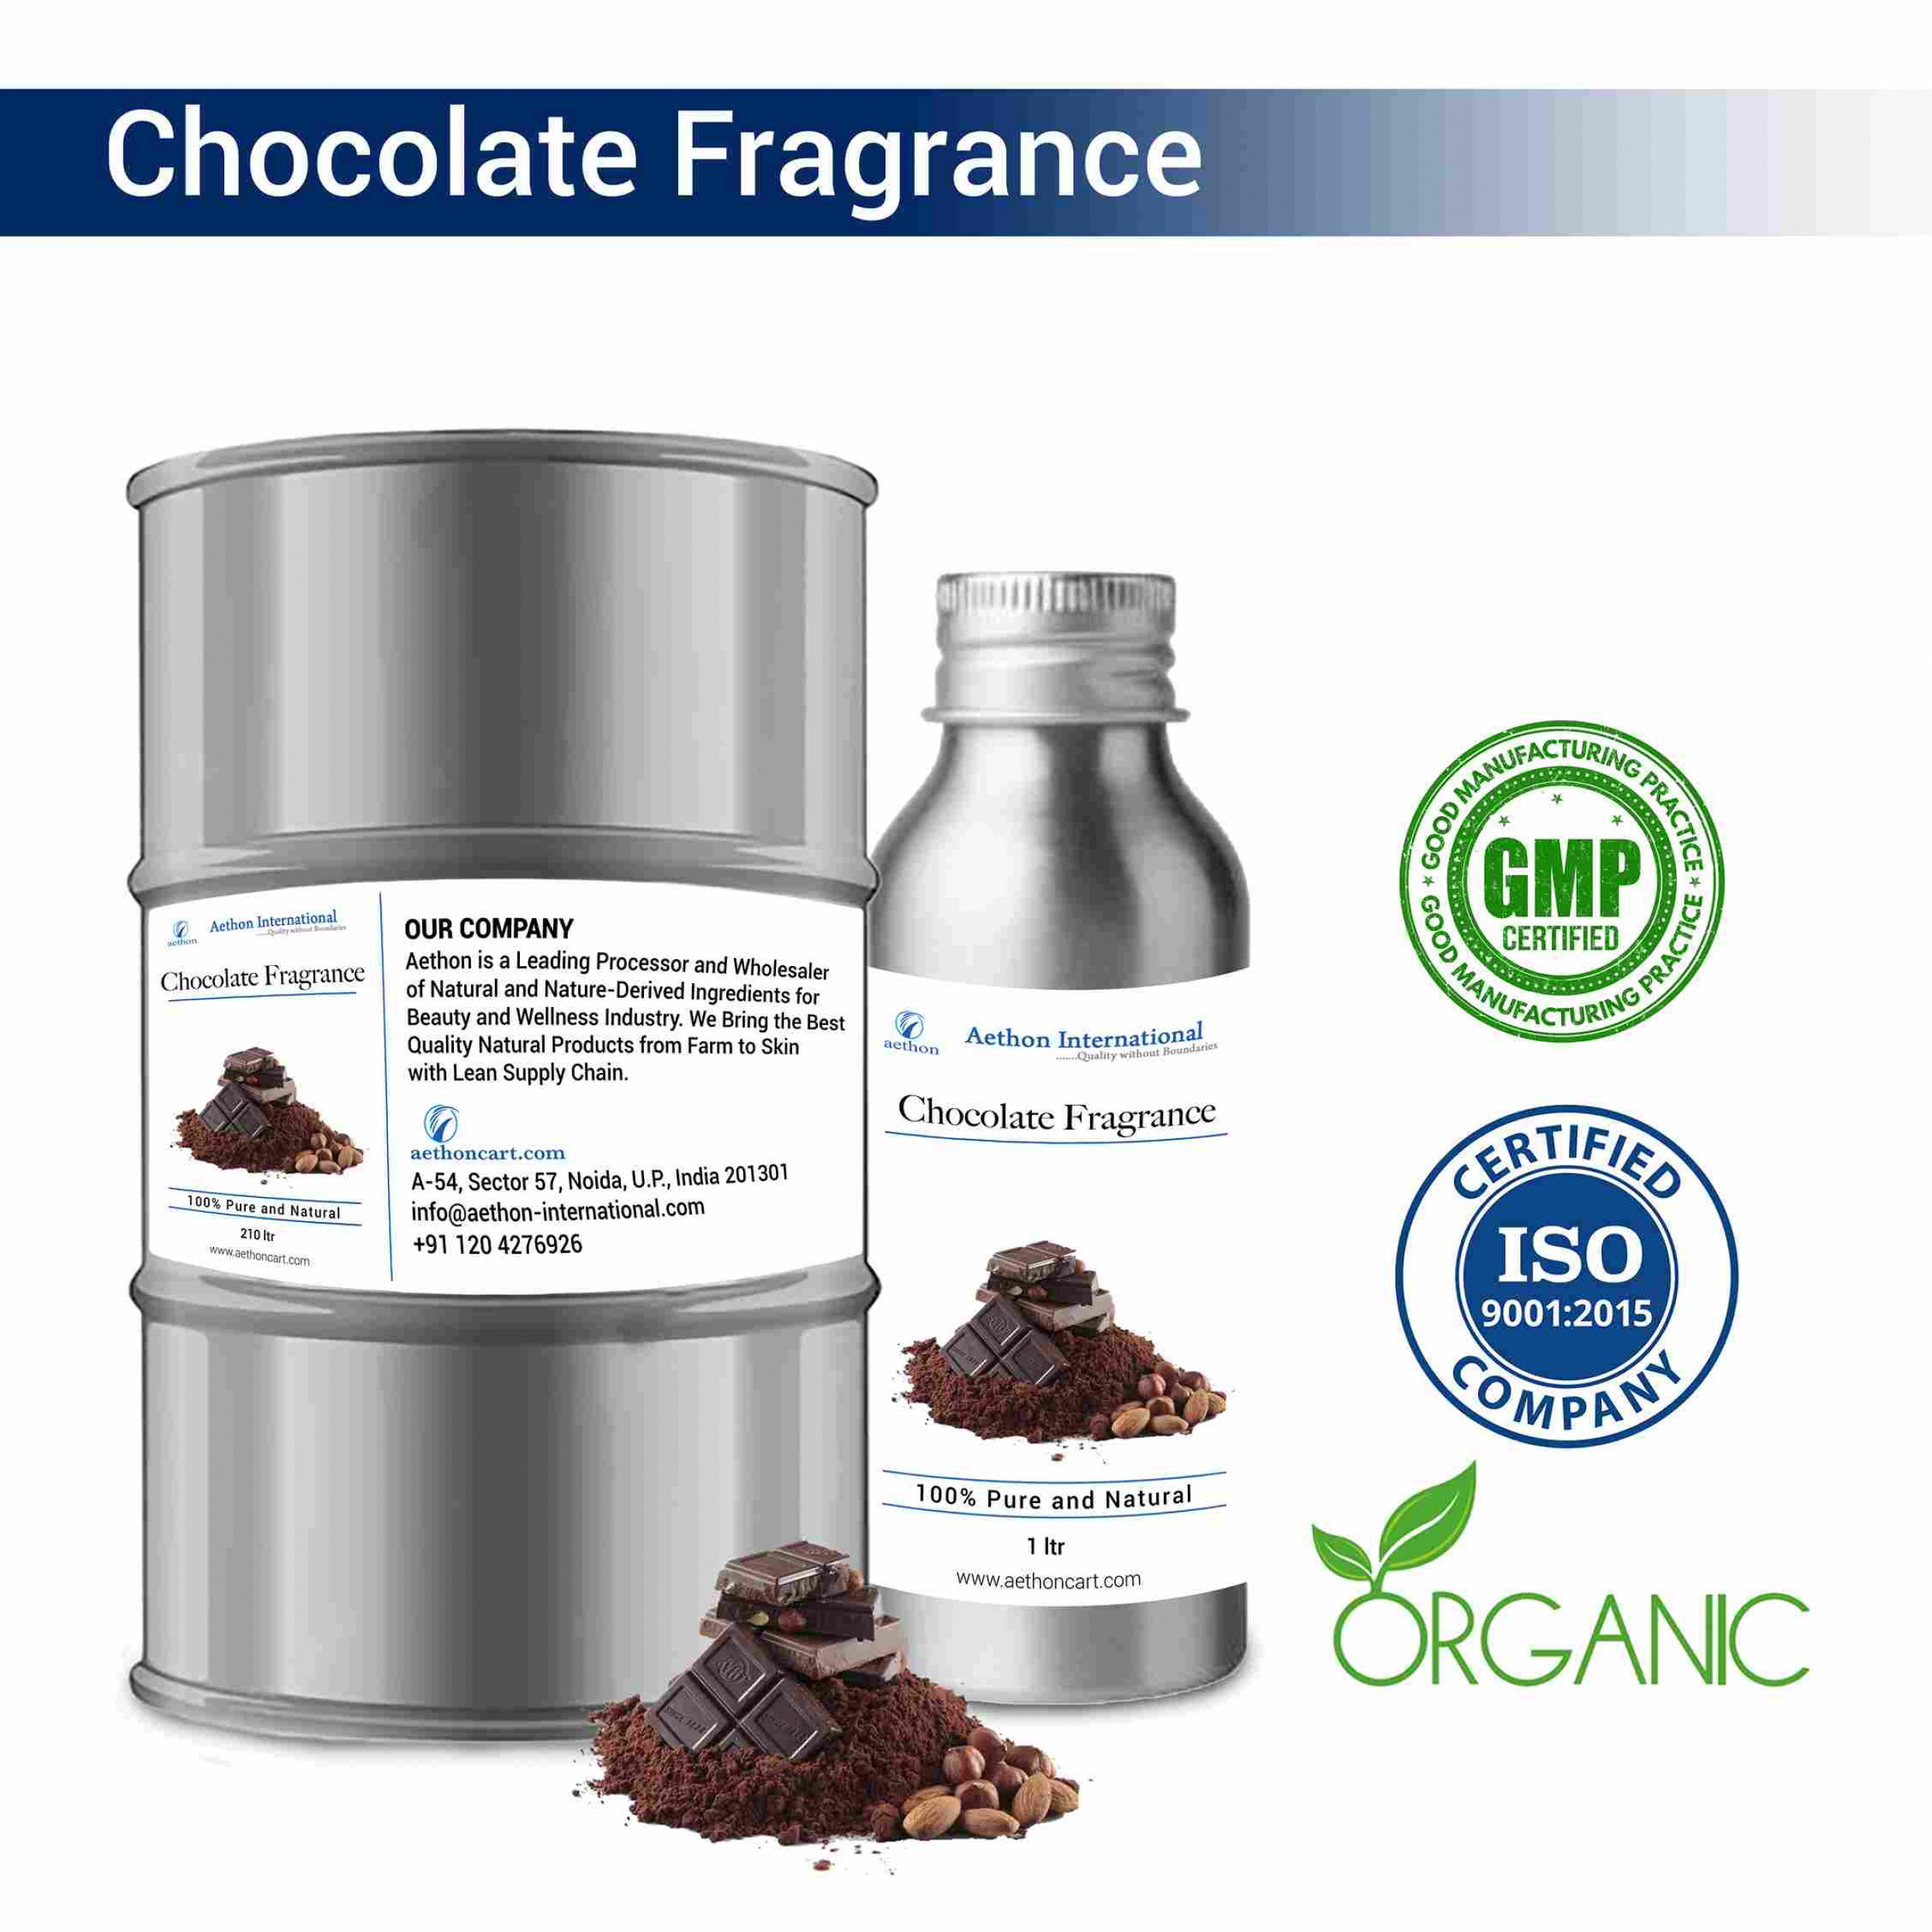 Chocolate Fragrance